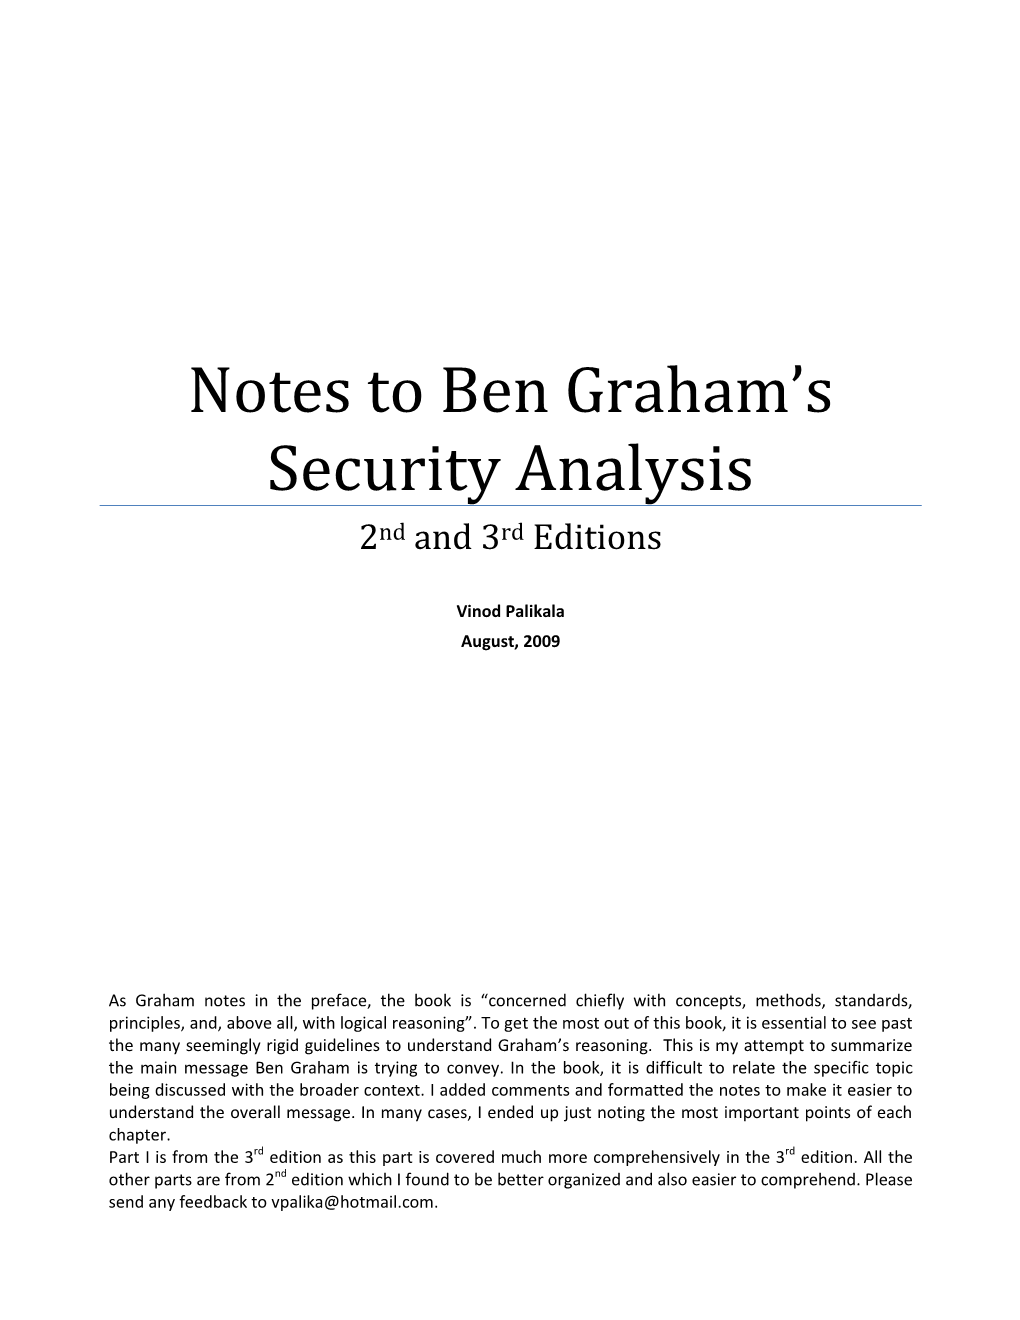 Notes to Ben Graham's Security Analysis